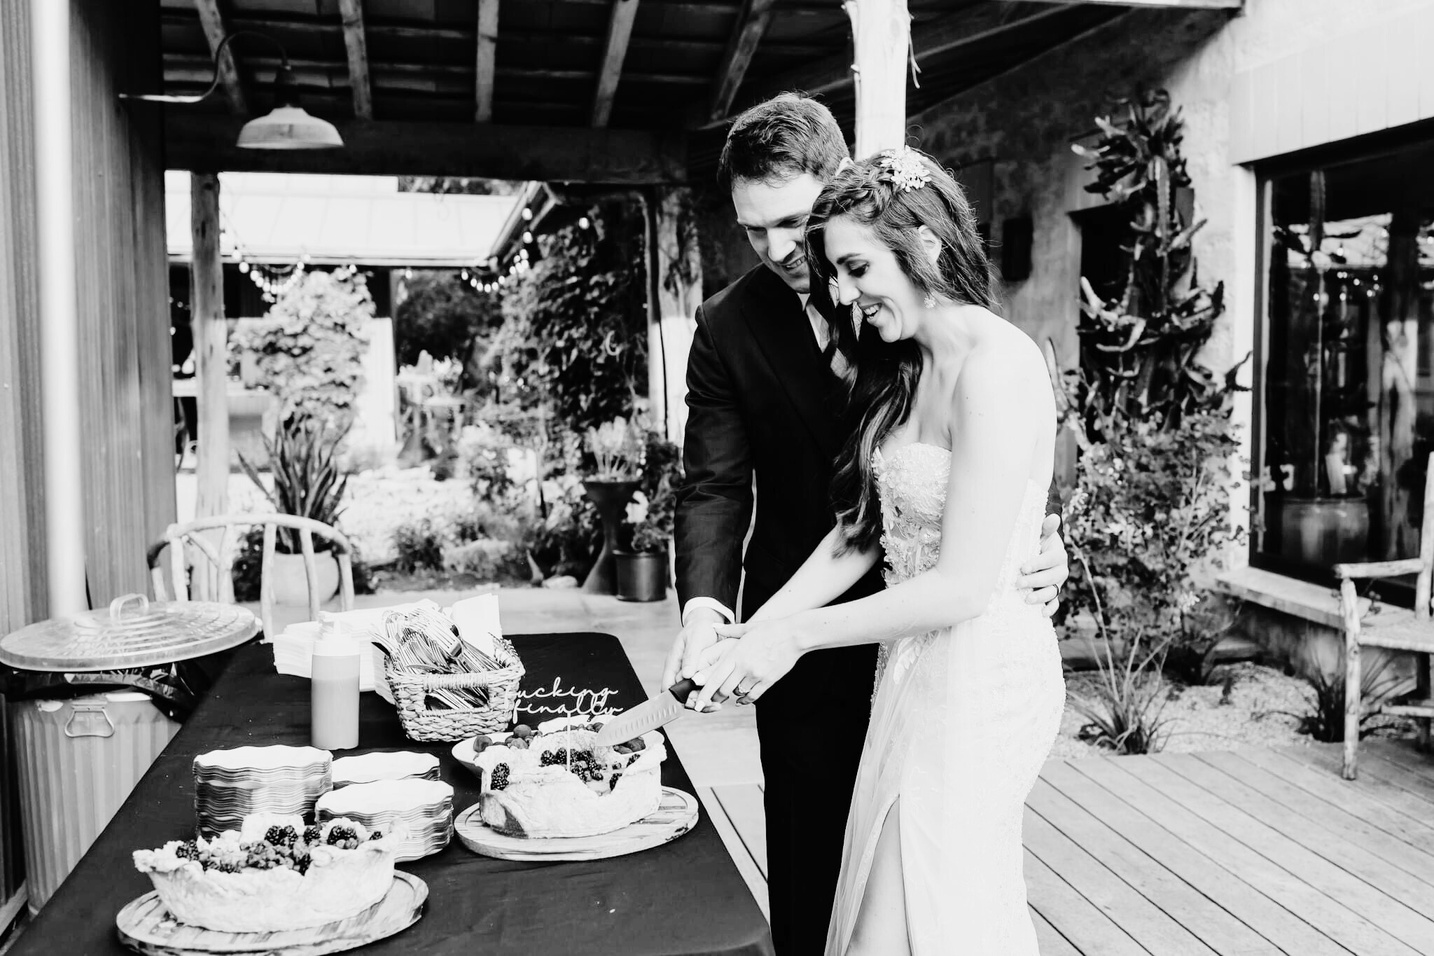 Bride
Groom
Wedding
Wedding Cake
Cut the cake
Wedding Planner
Wedding Party
Event Planner
Wedding Reception